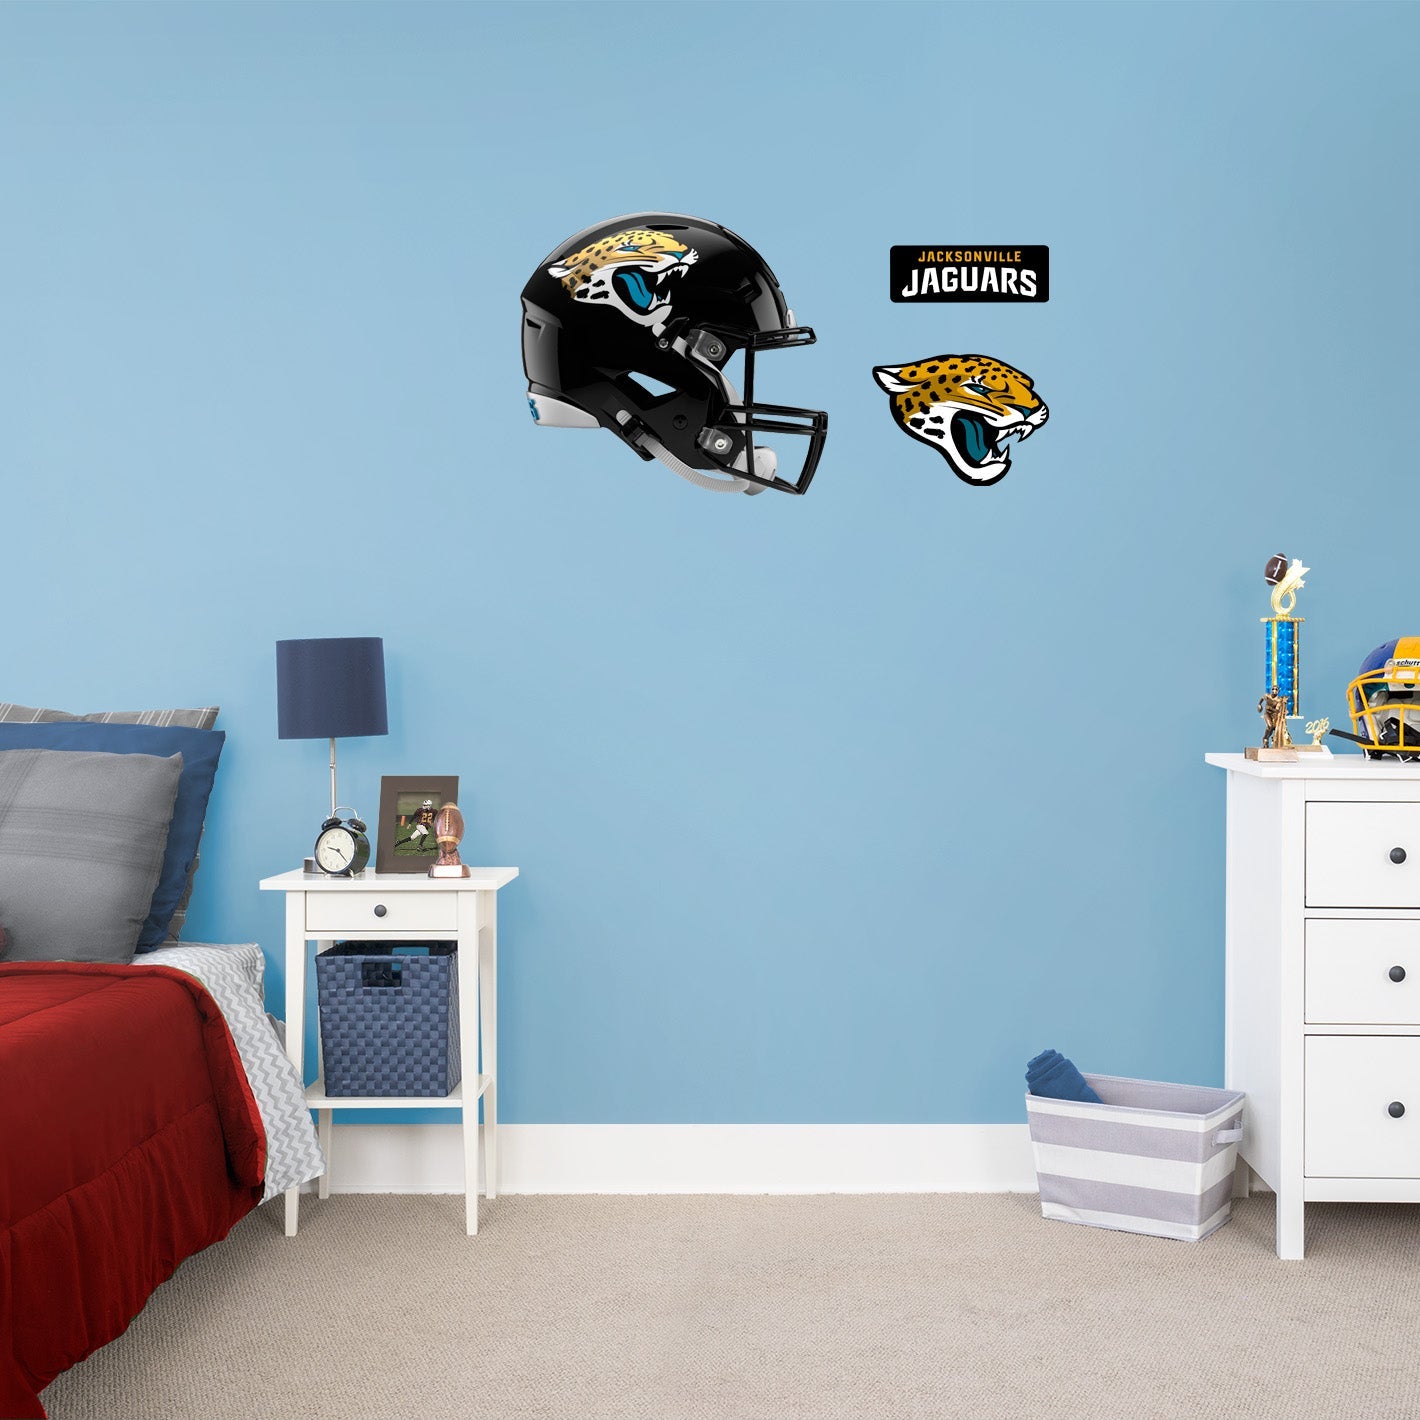 Jacksonville Jaguars: Helmet - Officially Licensed NFL Removable Adhesive Decal